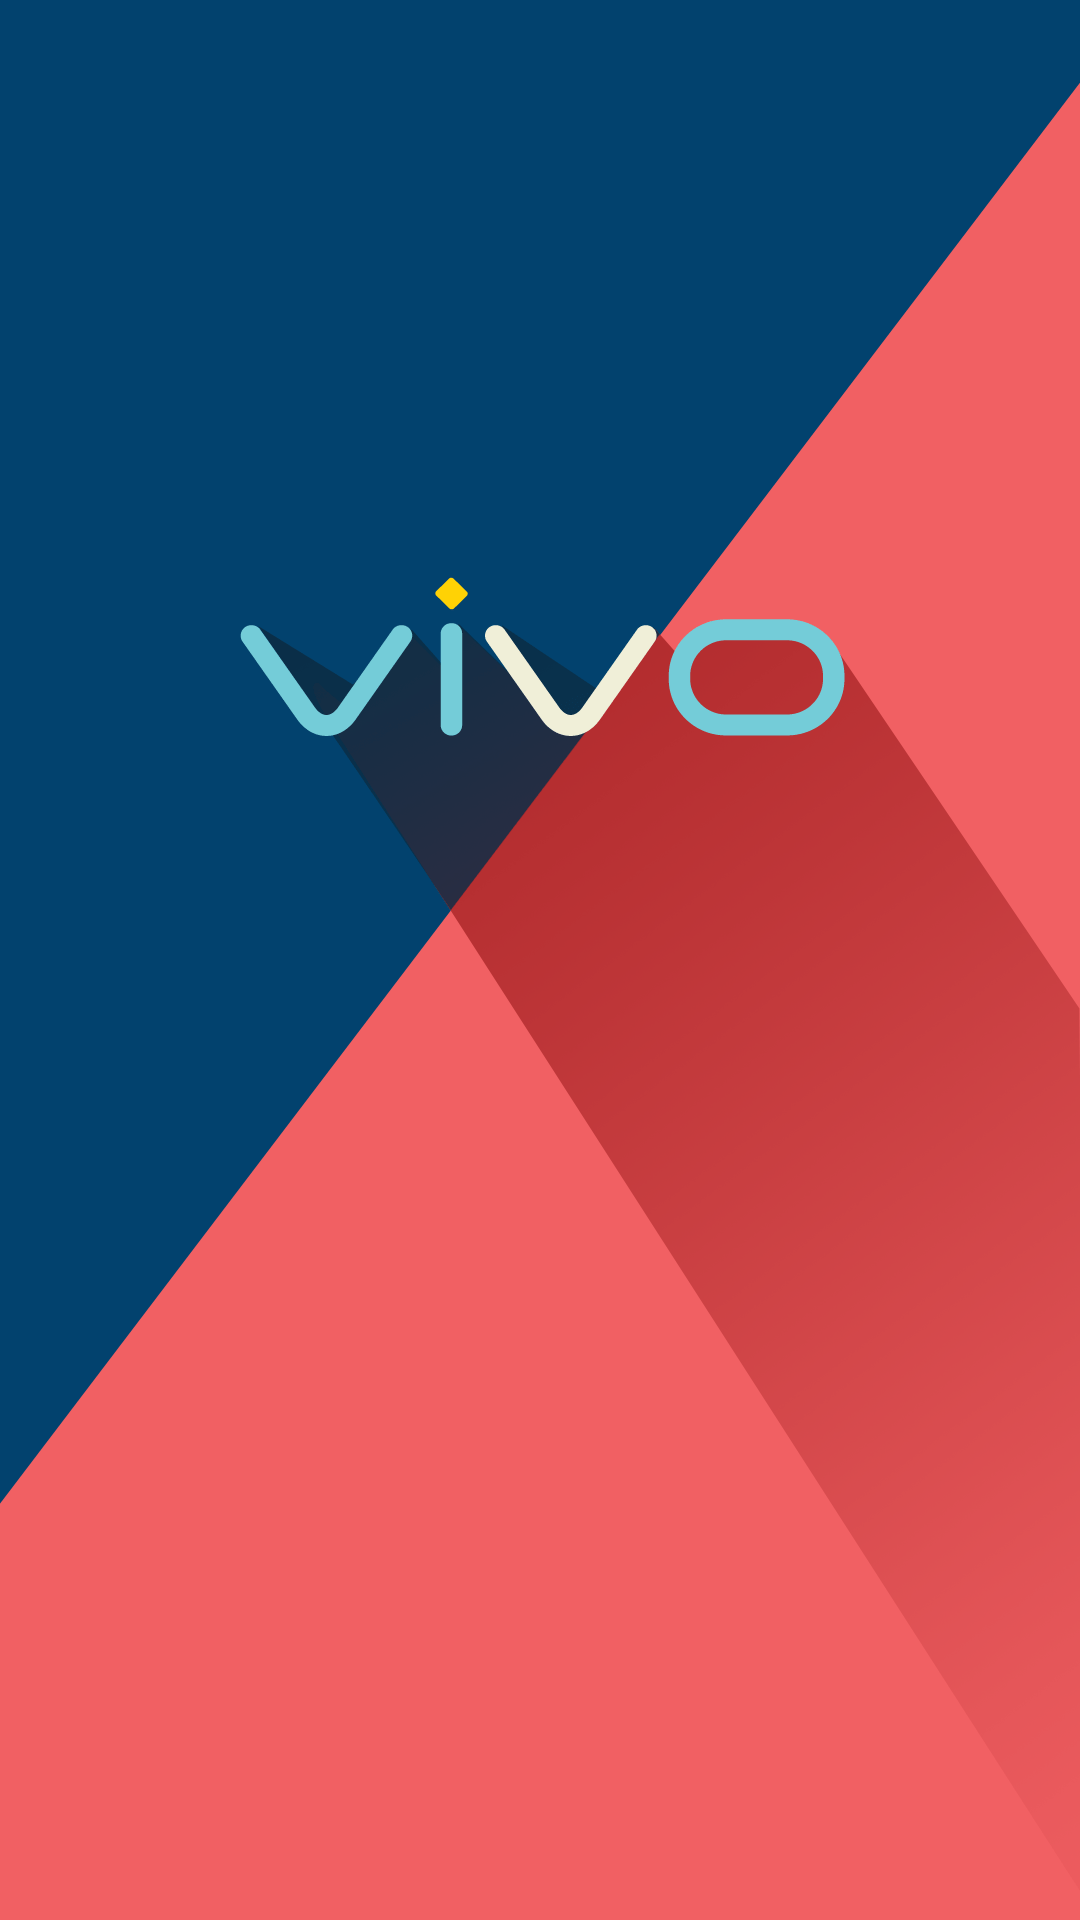 Download HD Vivo Logo - Sign Transparent PNG Image - NicePNG.com